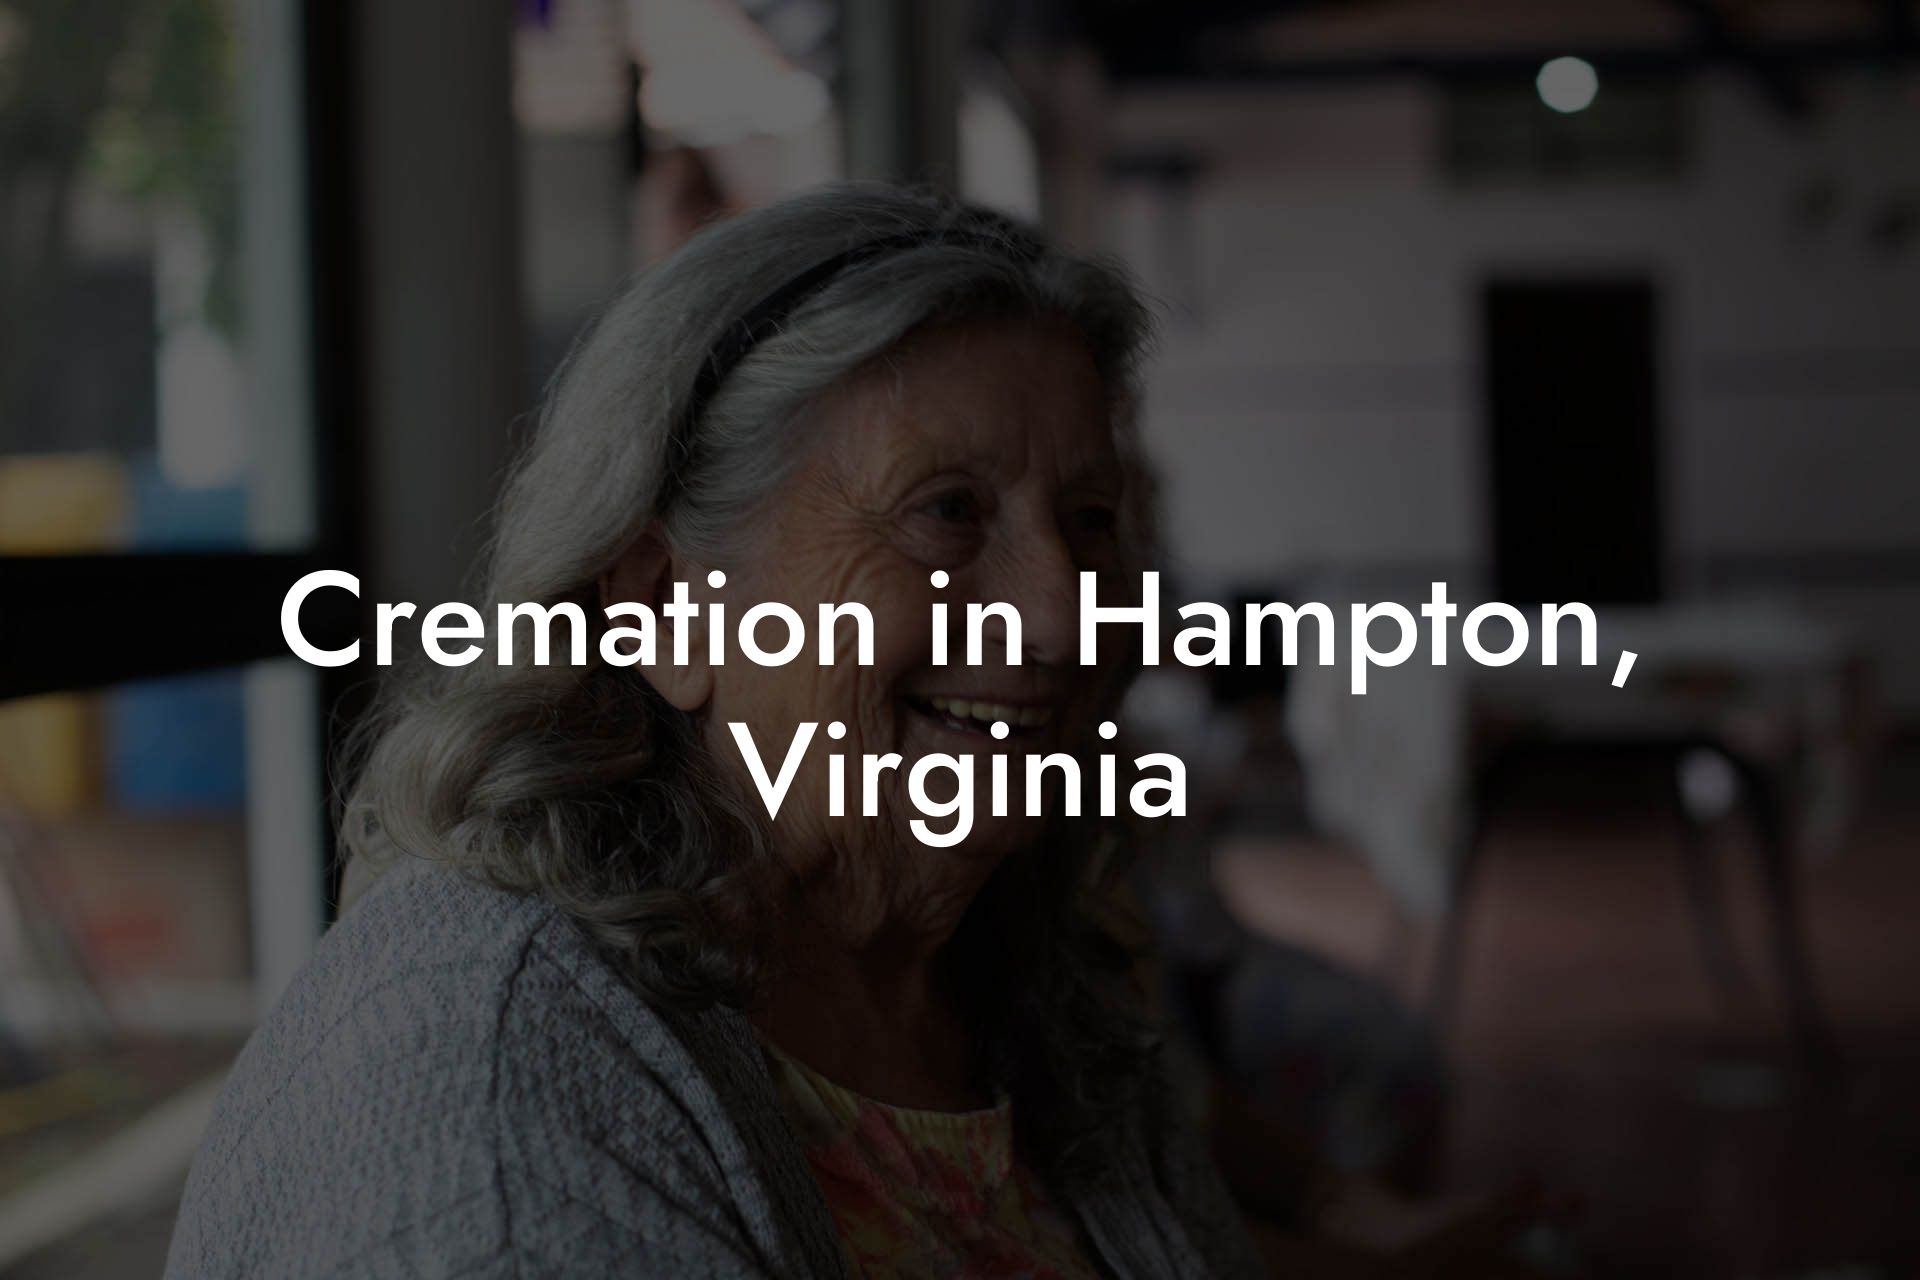 Cremation in Hampton, Virginia